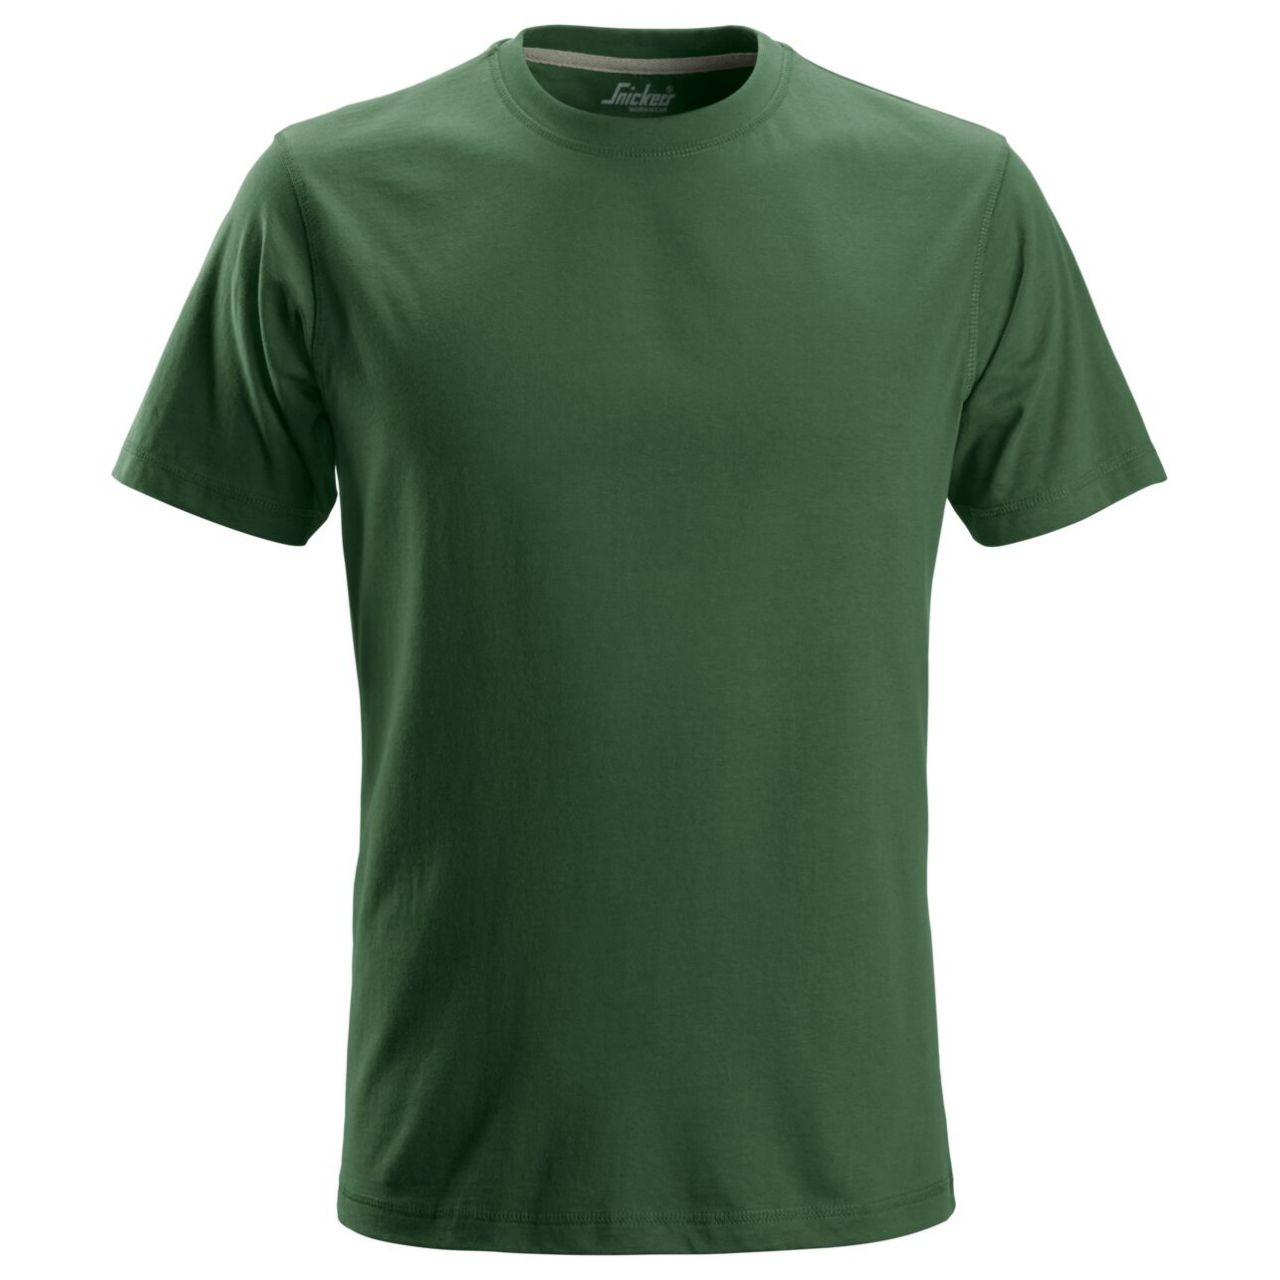 2502 Camiseta de manga corta clásica verde forestal talla S